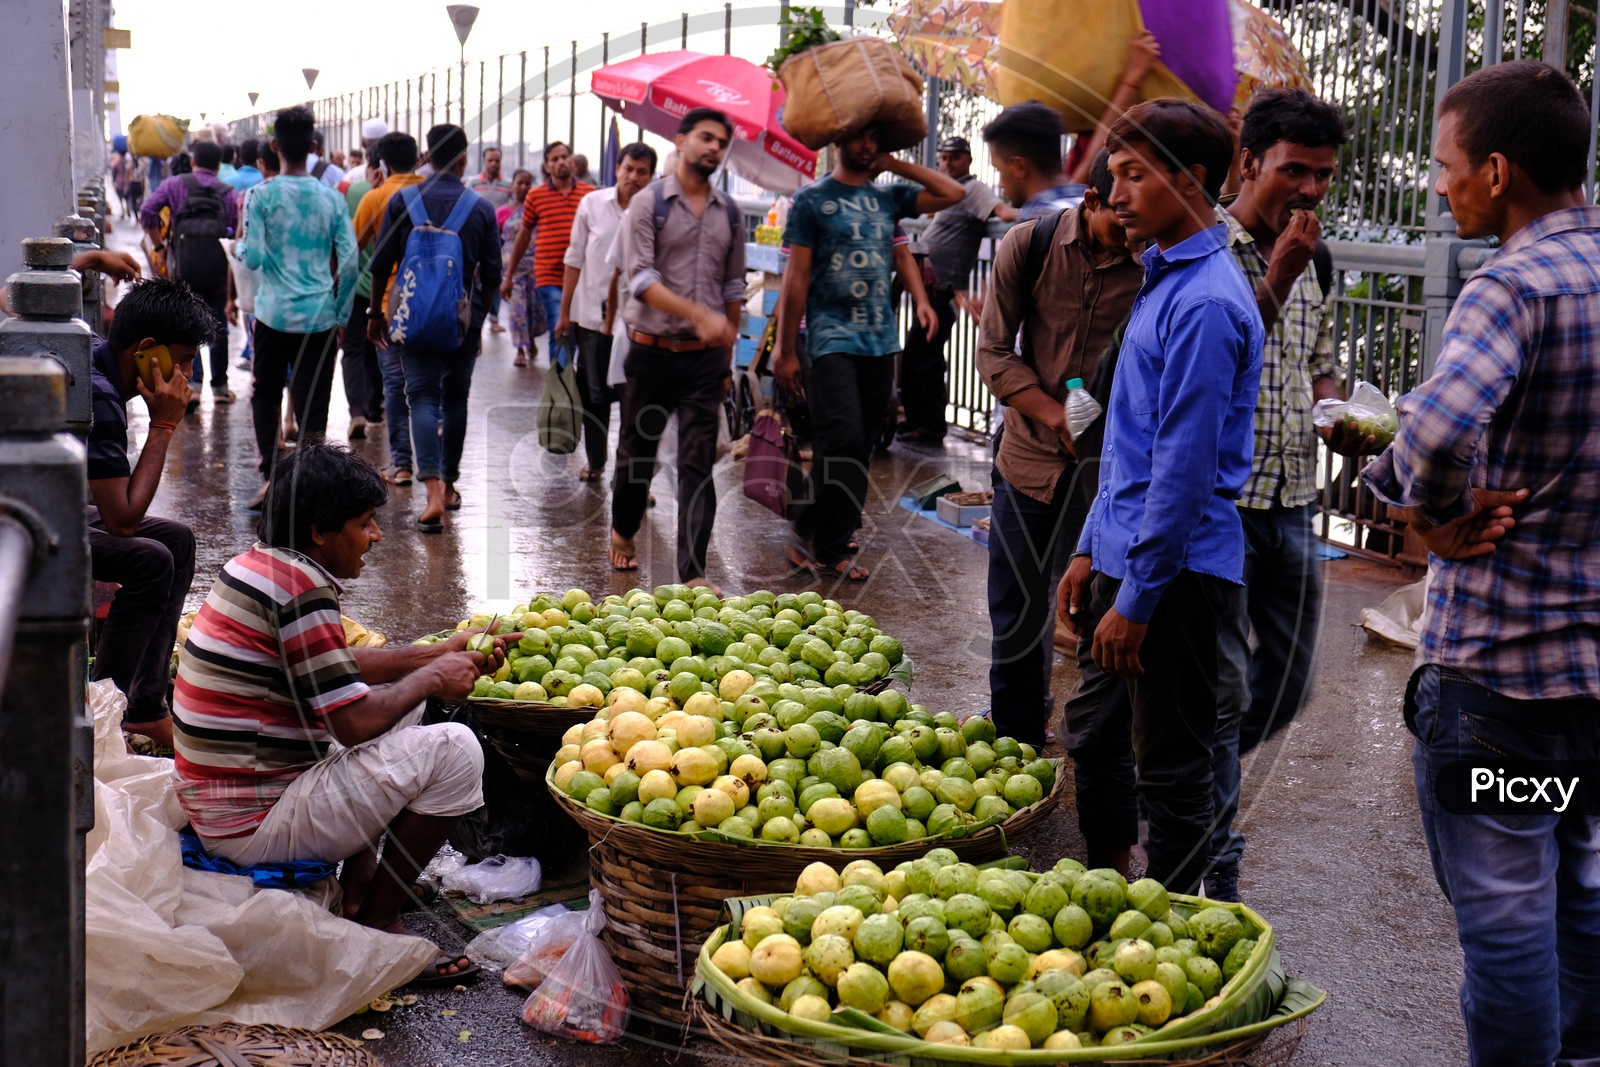 Indian Street Vendor selling guavas